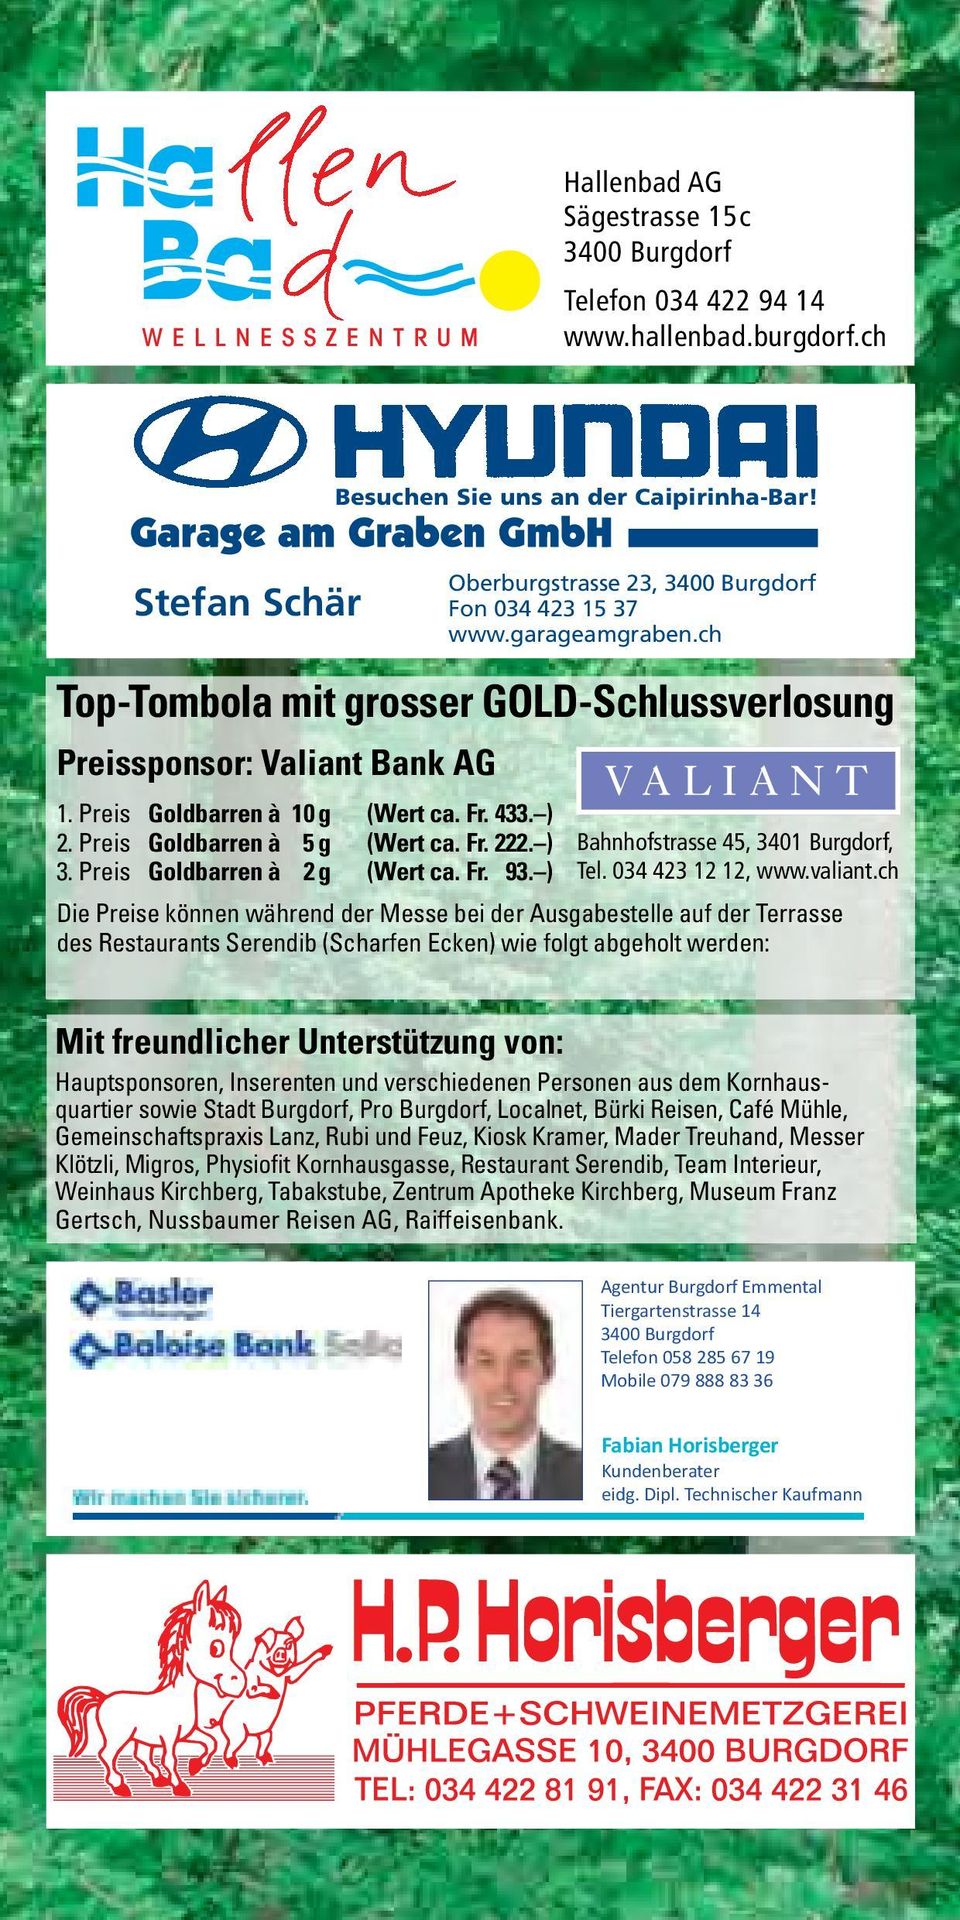 Preis Goldbarren à 2 g (Wert ca. Fr. 93. ) Bahnhofstrasse 45, 3401 Burgdorf, Tel. 034 423 12 12, www.valiant.